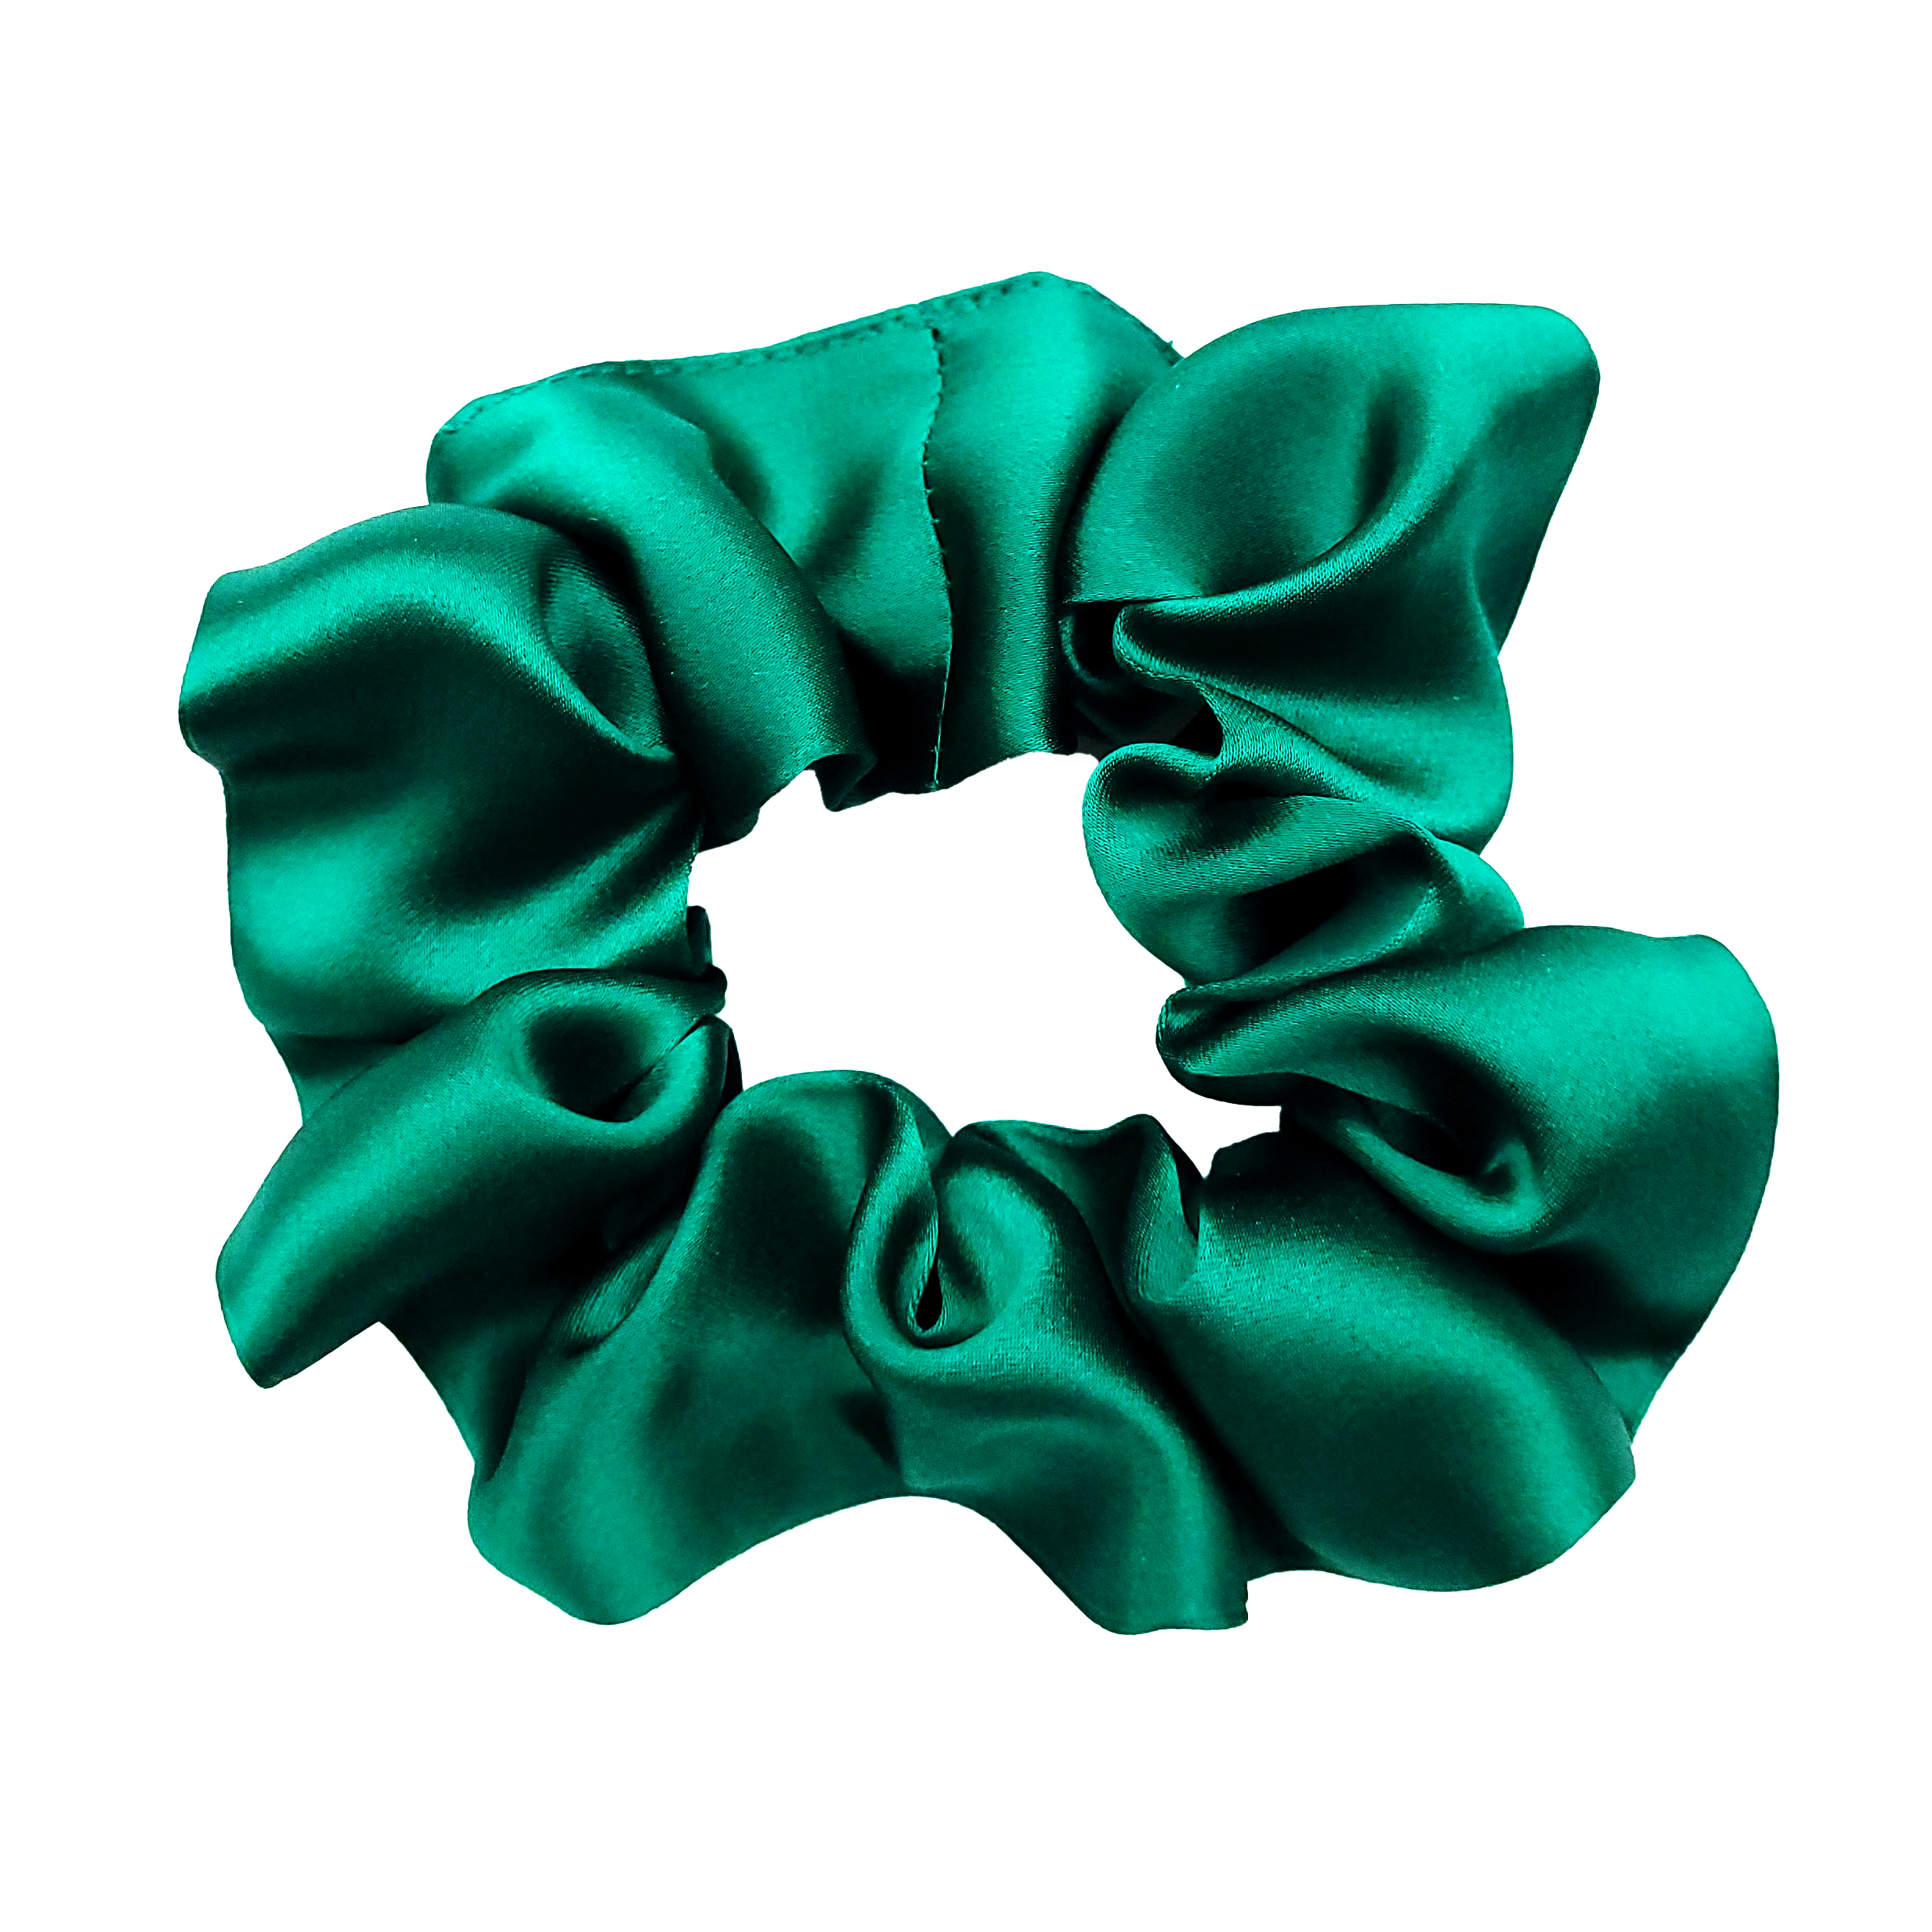 emerald green pure silk satin small size scrunchie pony tail holder hair tie hair accessory handmade by Lynne Kiel